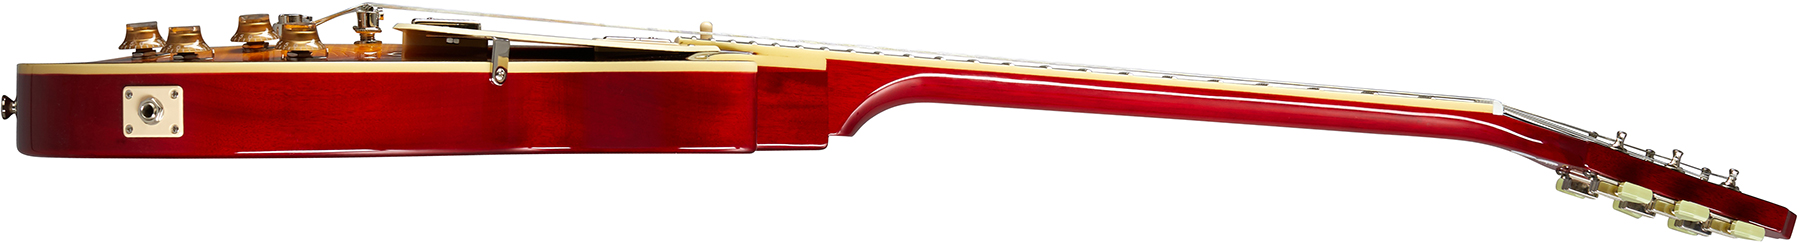 Epiphone Les Paul Standard 50s 2h Ht Rw - Heritage Cherry Sunburst - Single cut electric guitar - Variation 2